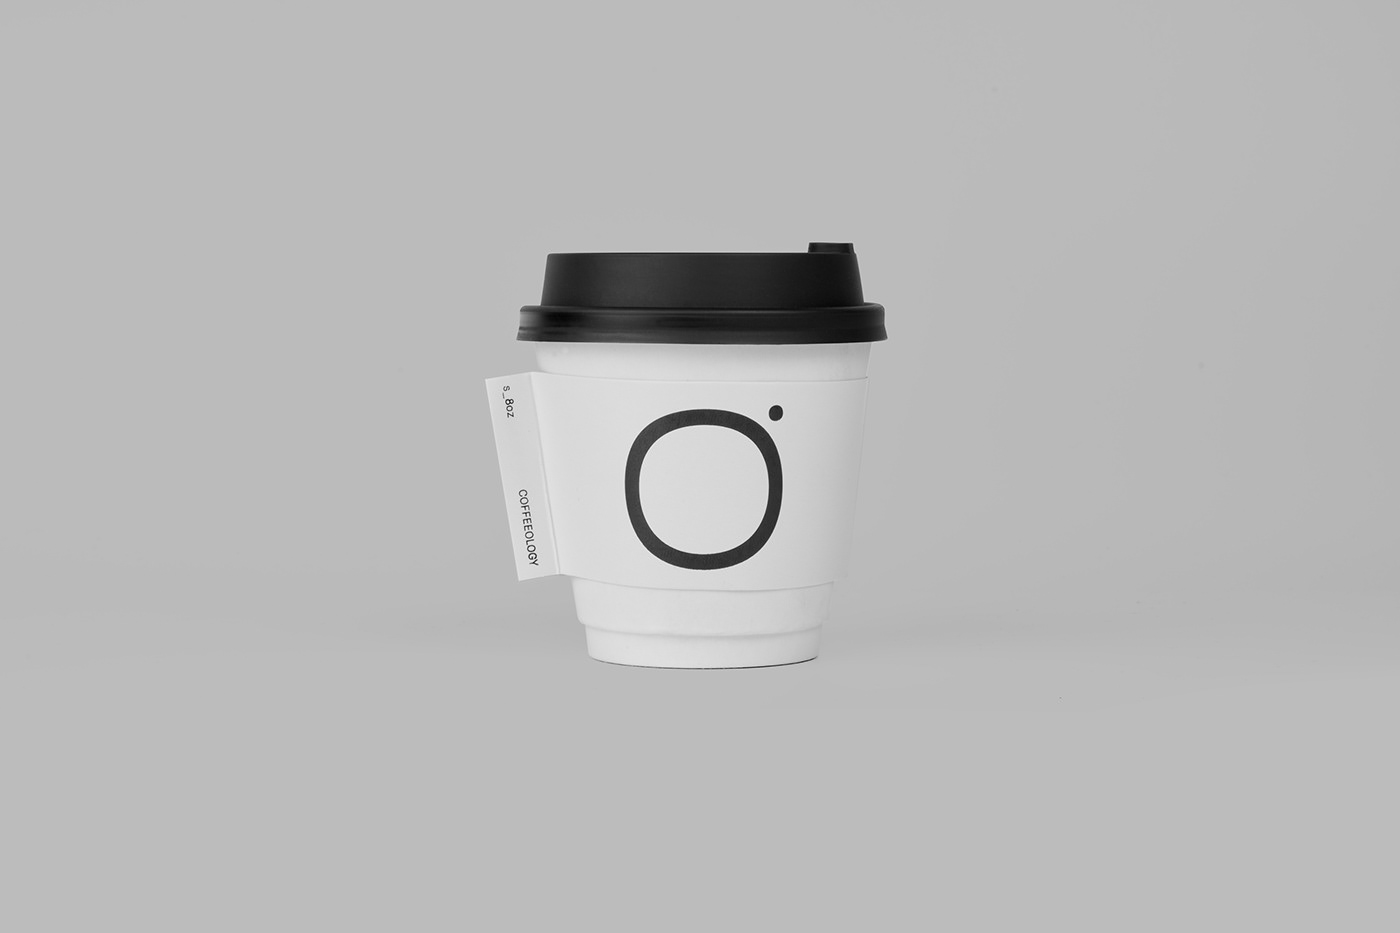 Coffeeology咖啡馆品牌视觉设计